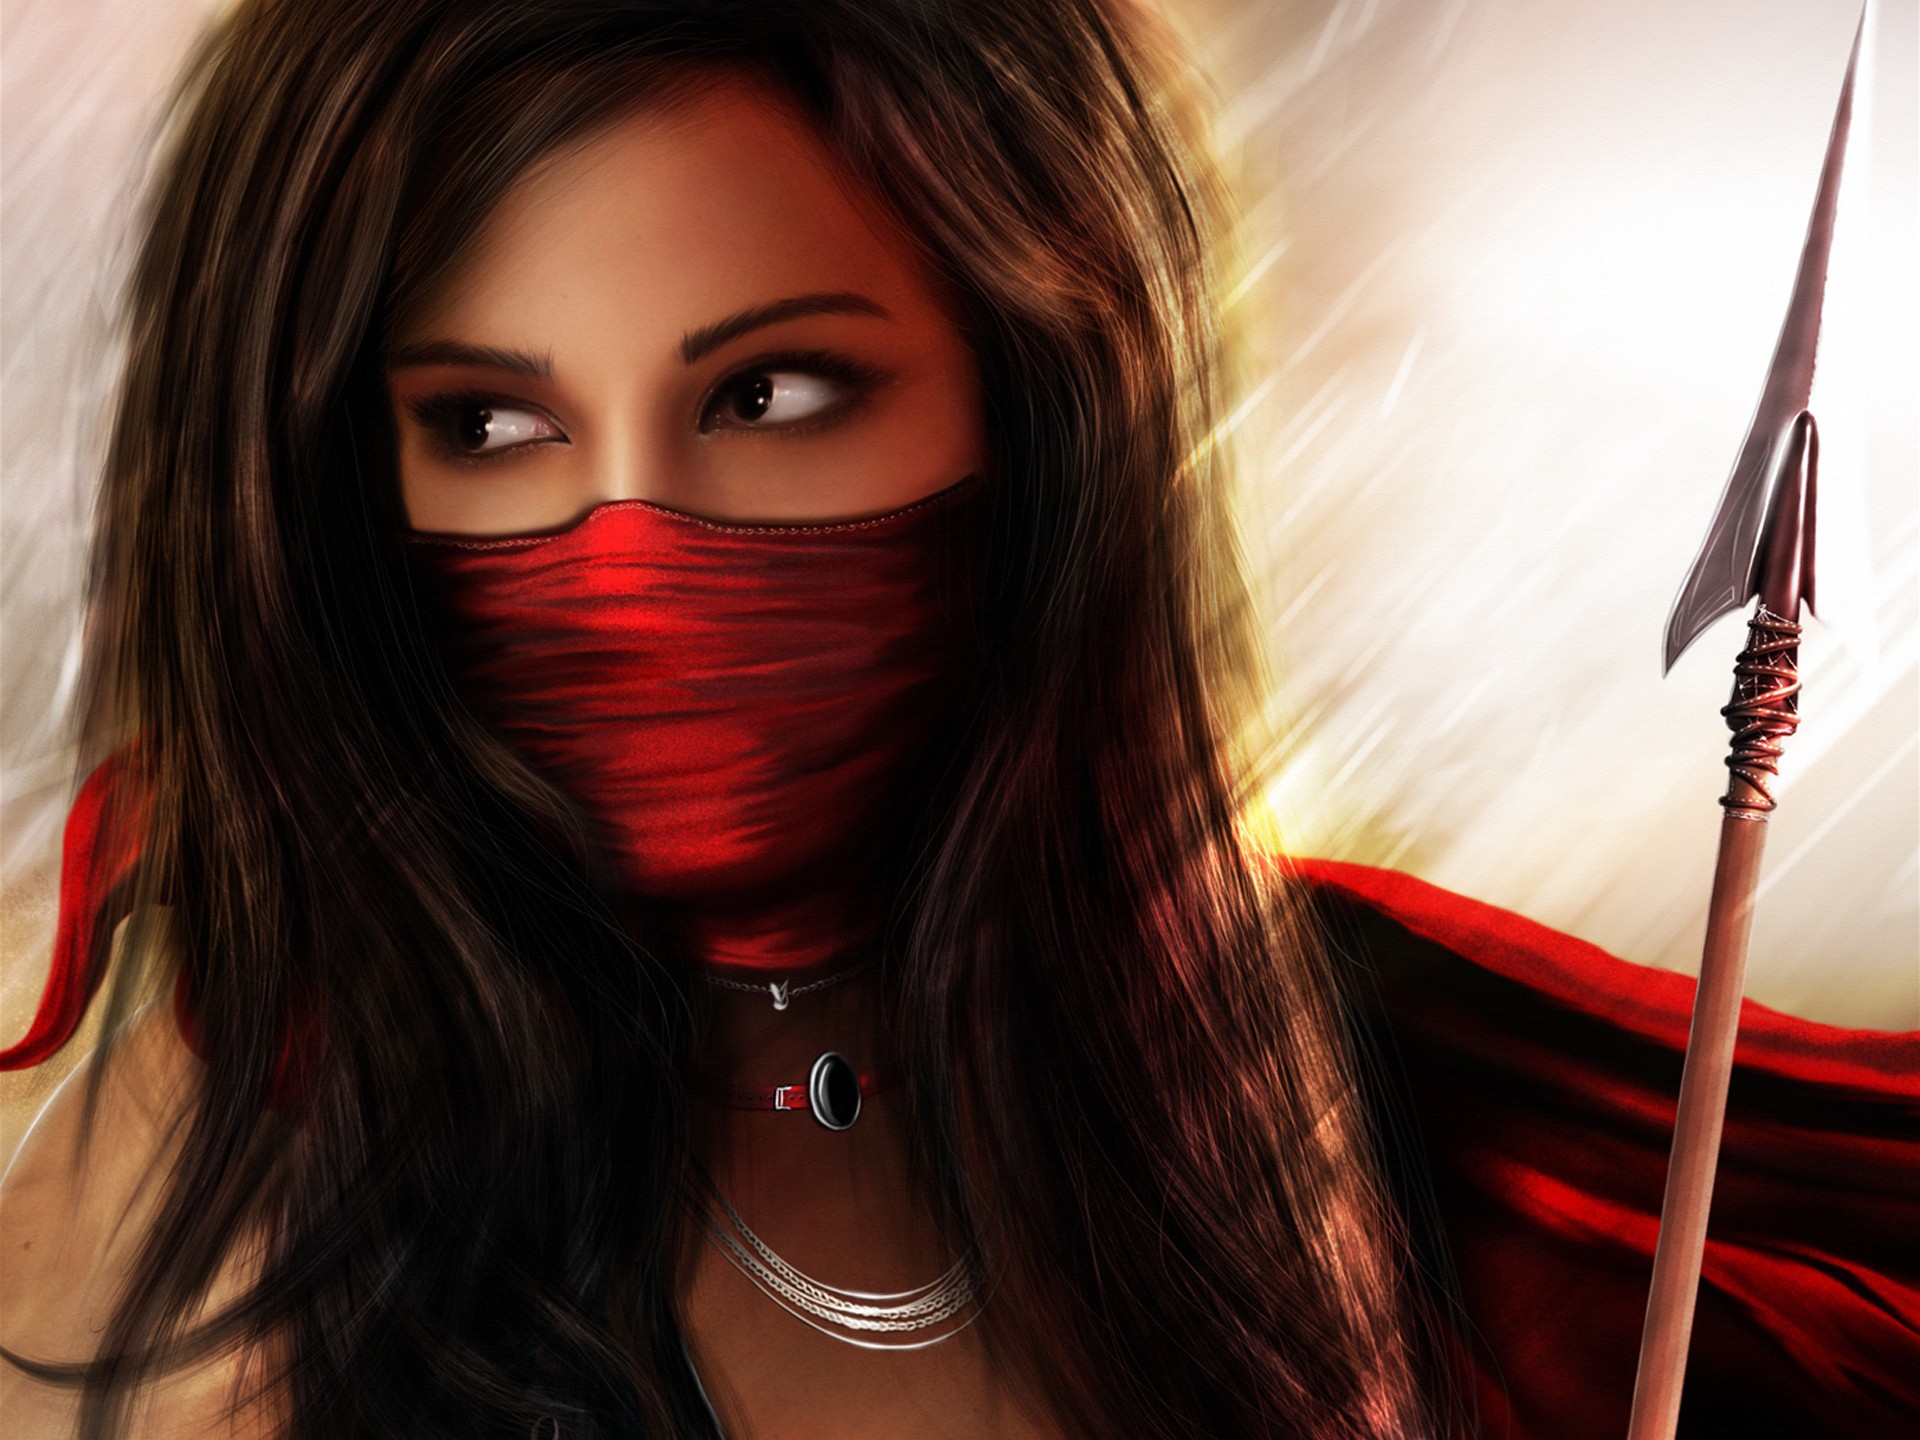 Red Warrior Girl desktop wallpaper depicting a fierce woman warrior in a fantasy setting.